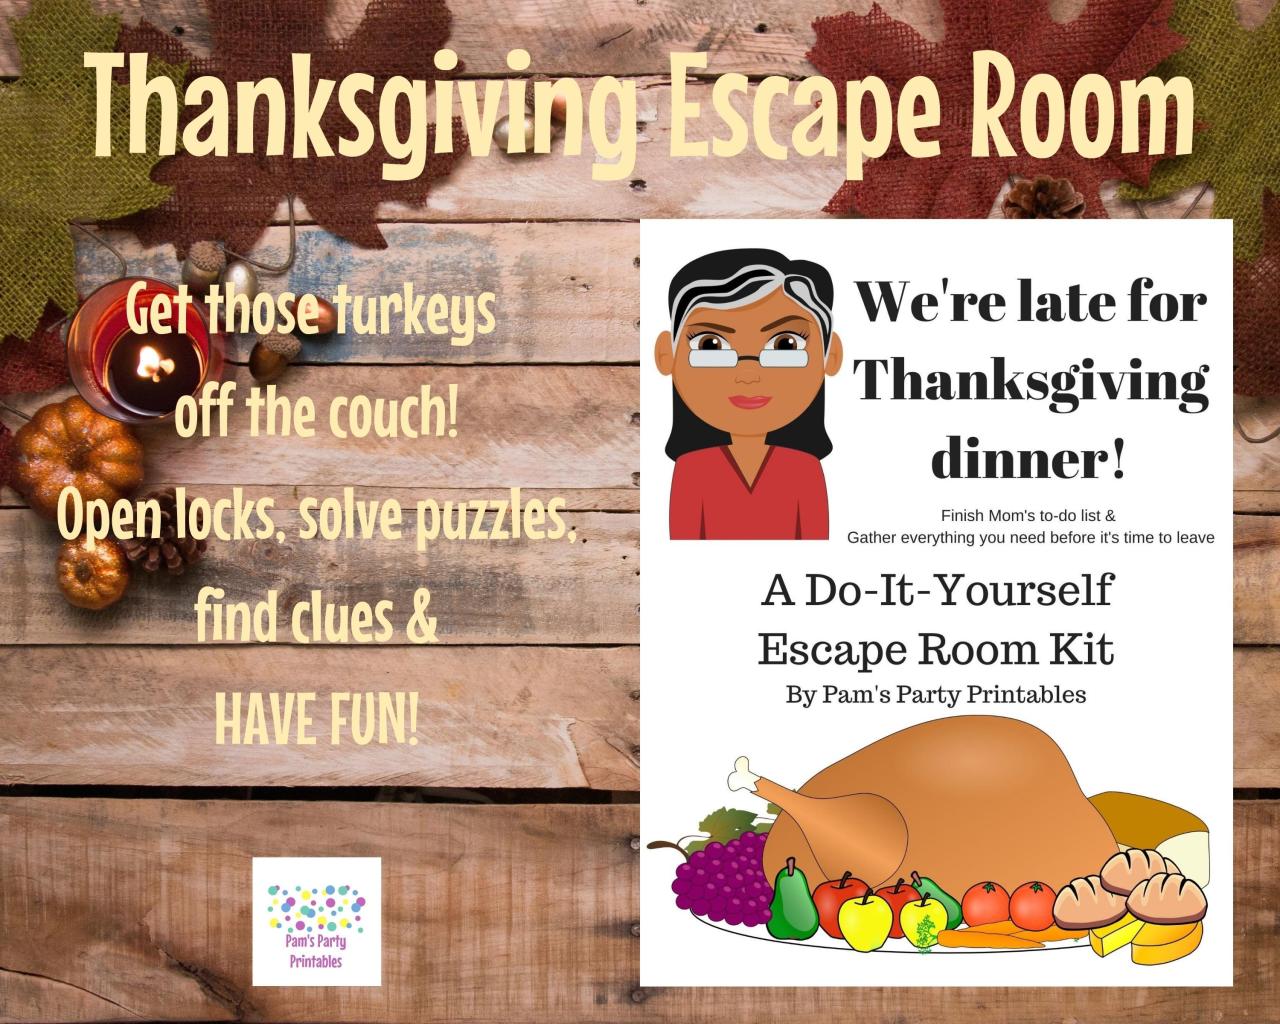 Thanksgiving escape room